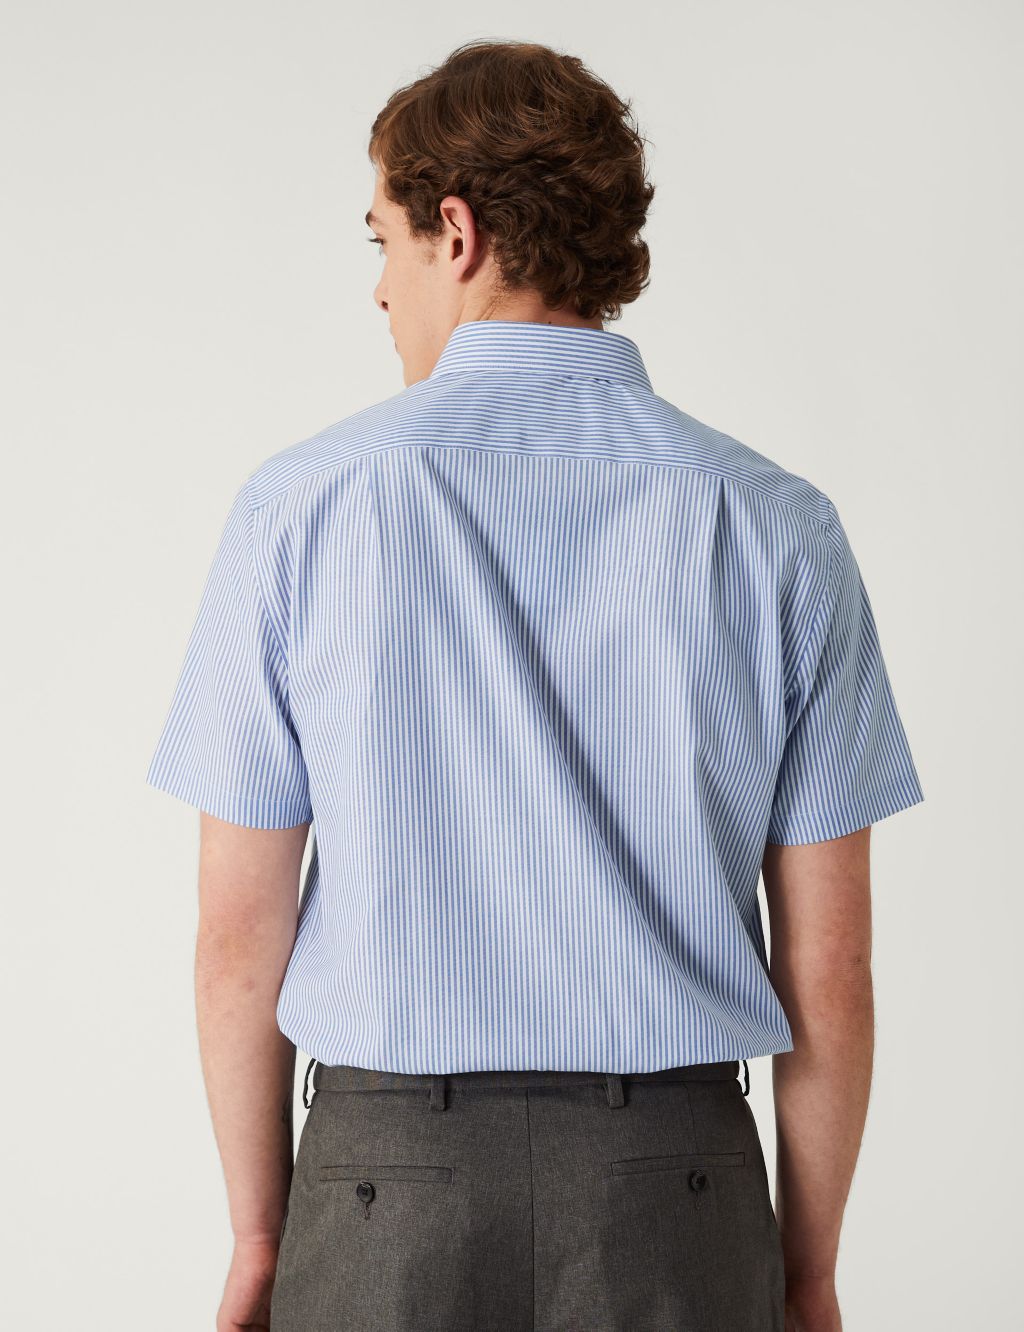 Regular Fit Non Iron Pure Cotton Oxford Shirt image 3